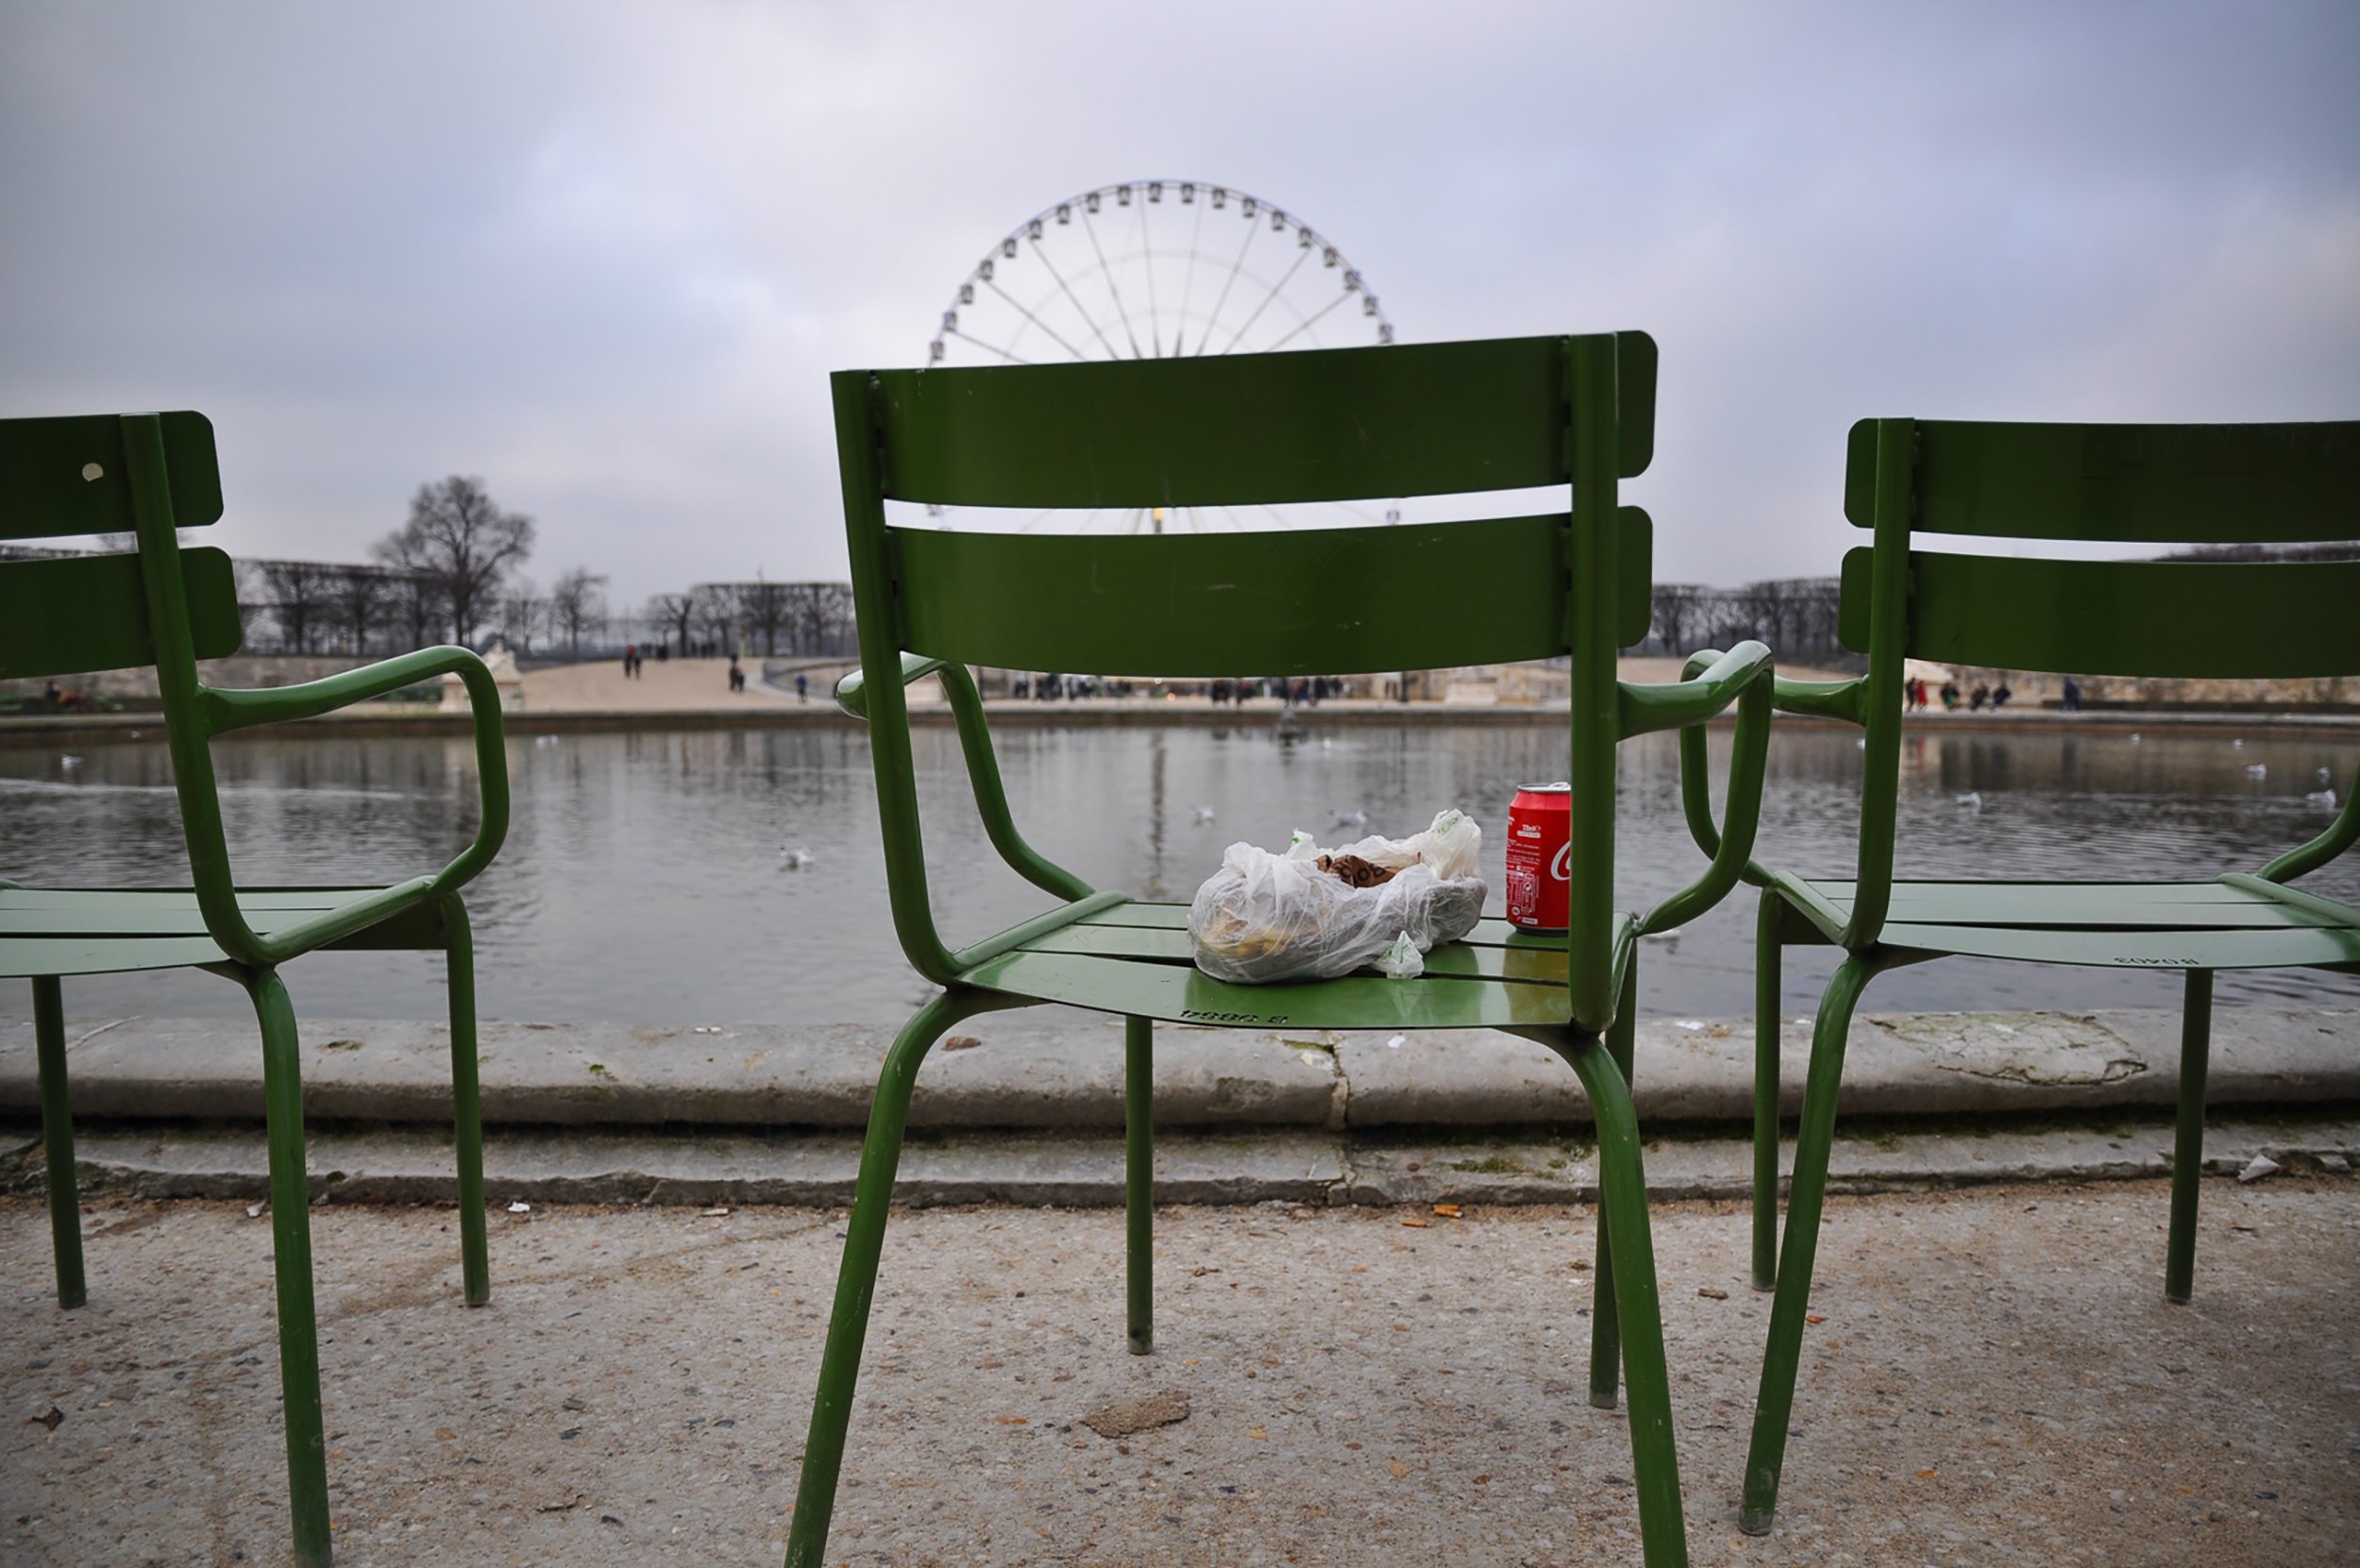   Coke, Lunch, and Ferris Wheel.  Paris, France. 2018. 